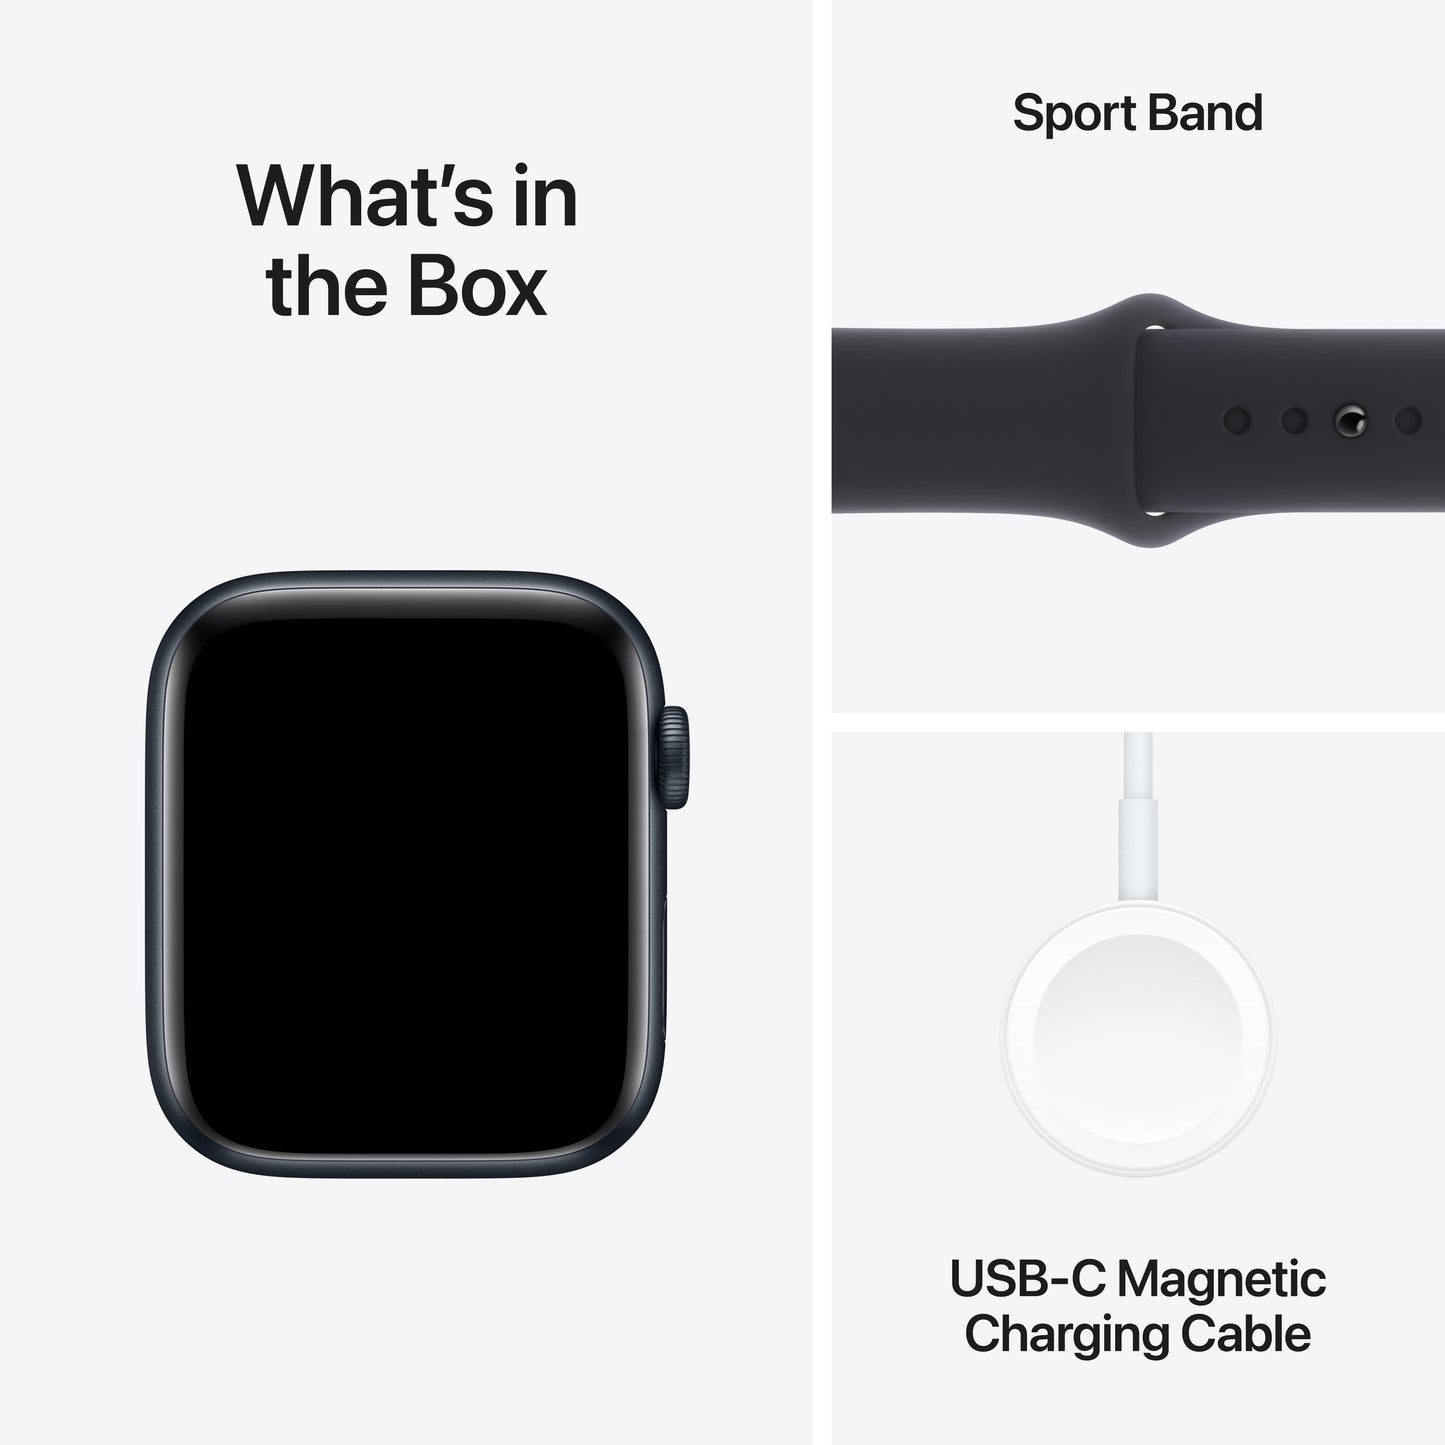 Apple Watch SE GPS 40mm Midnight Aluminium Case with Midnight Sport Band - M/L